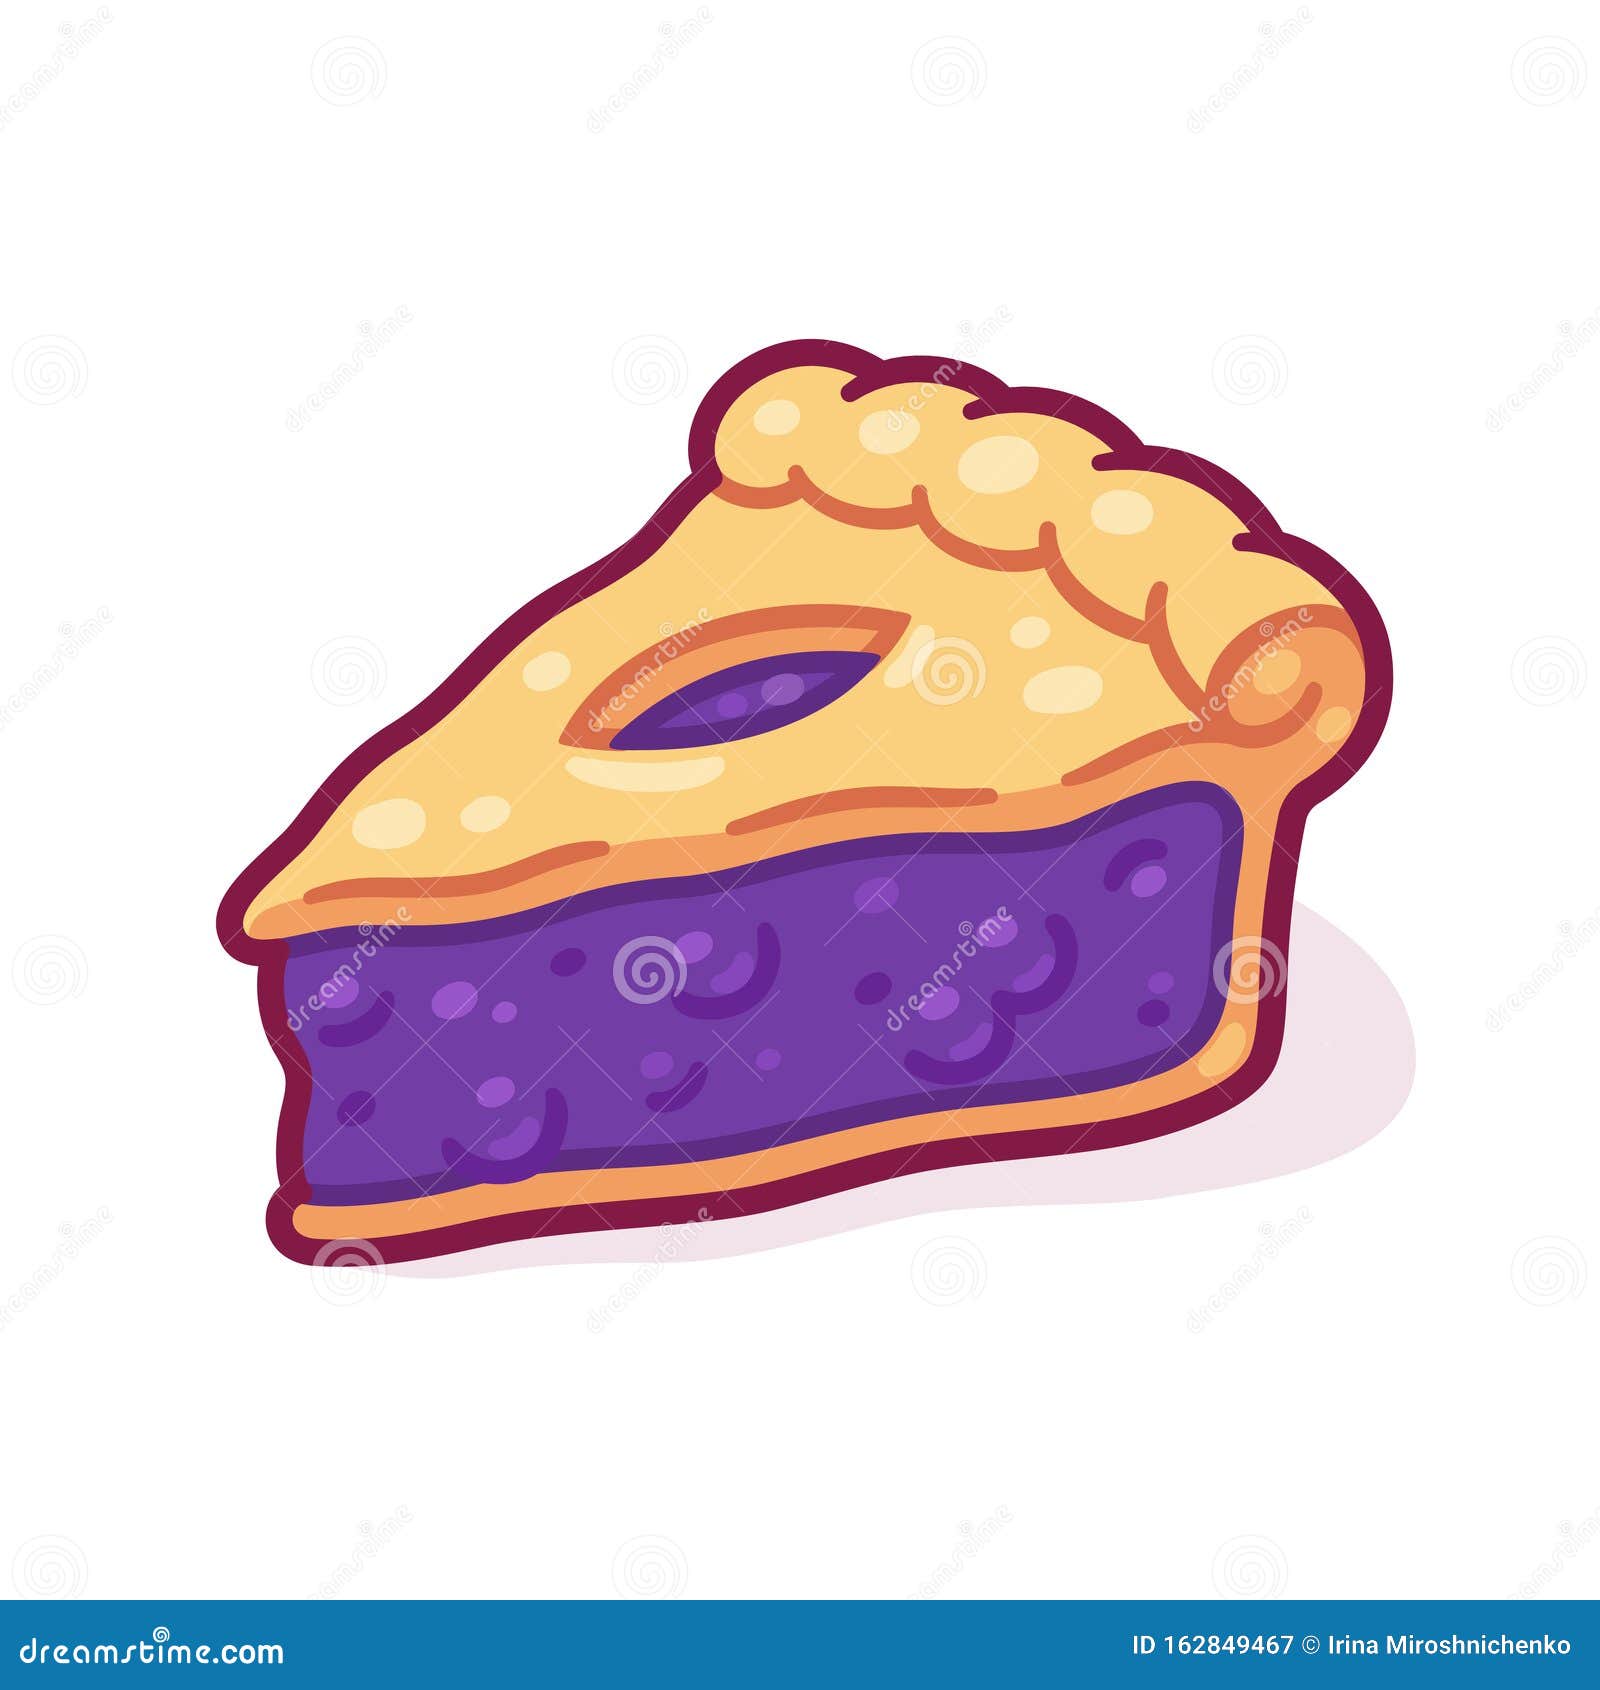 Cartoon Blueberry Pie Slice Stock Vector - Illustration of blueberry,  sweet: 162849467